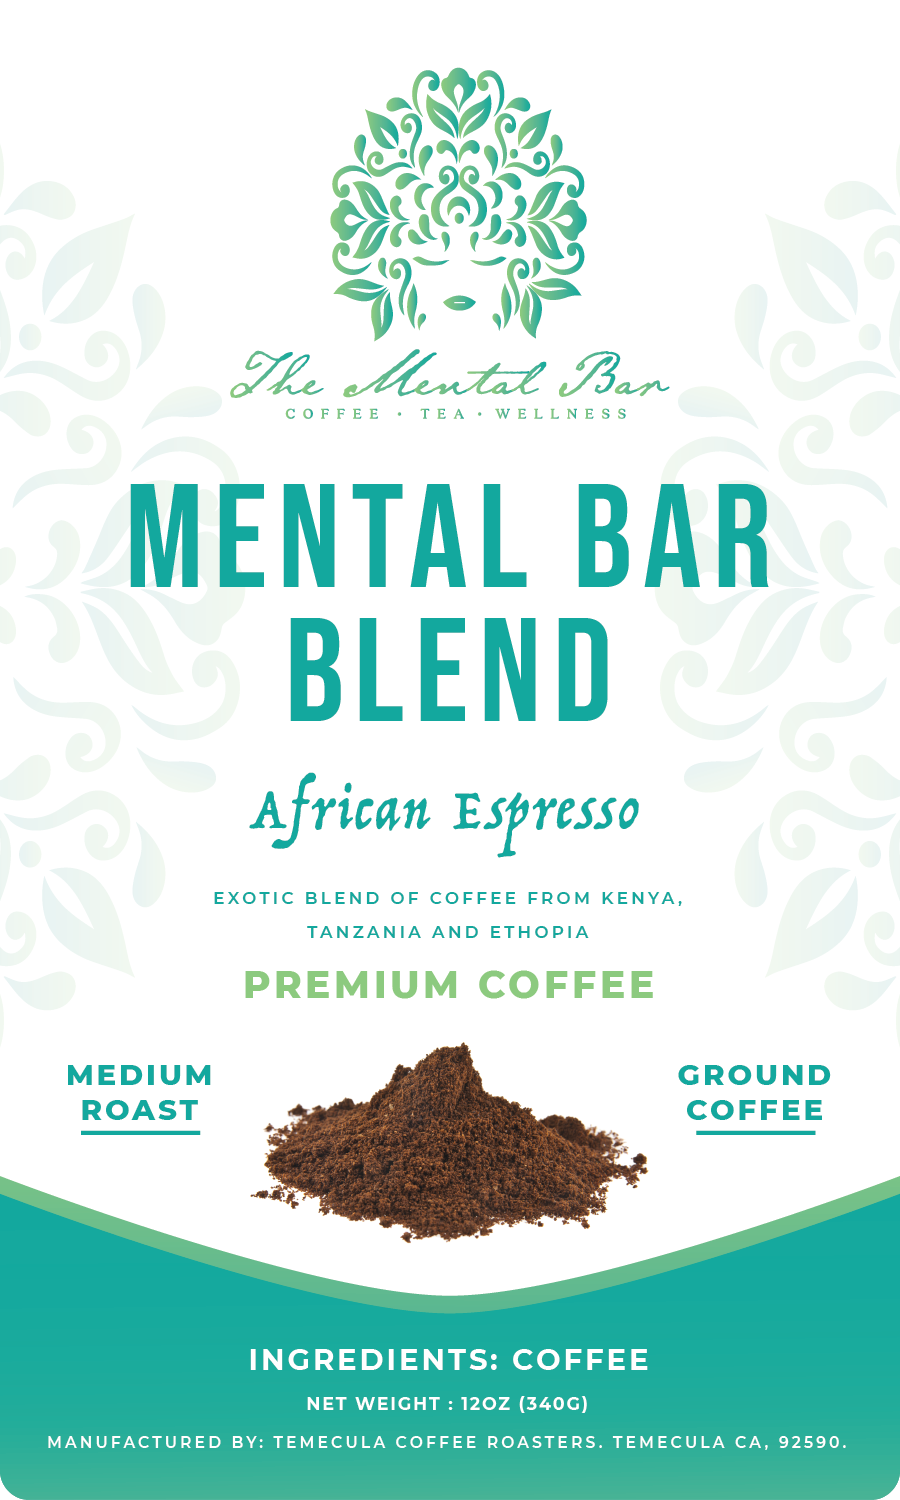 Mental Bar Blend (African Espresso) - The Mental Bar